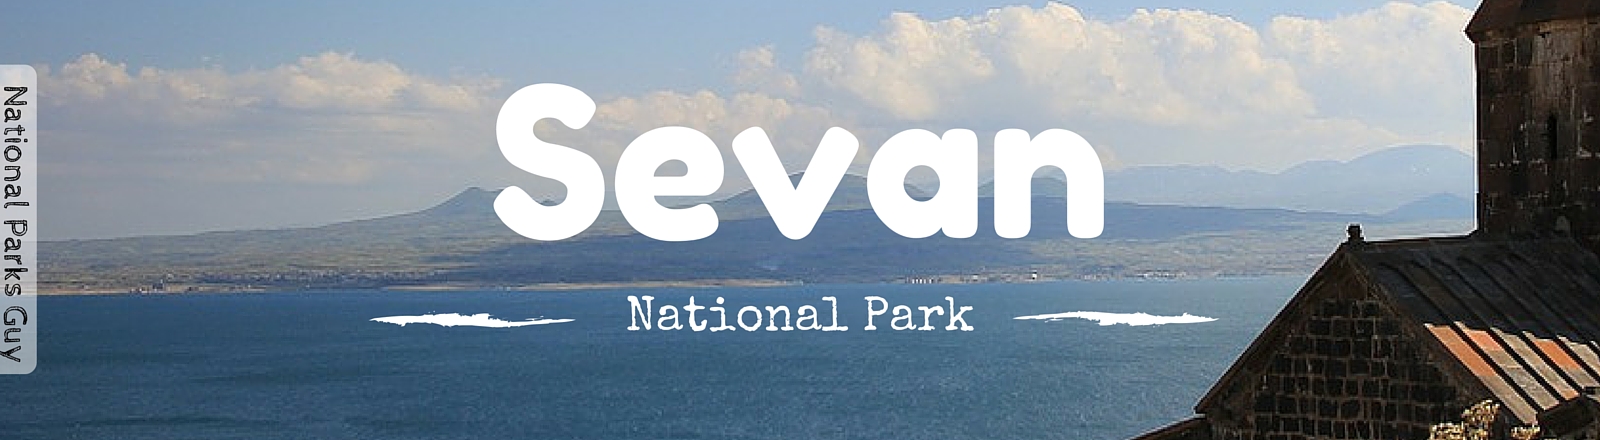 Sevan National Park, Armenia, National Parks Guy